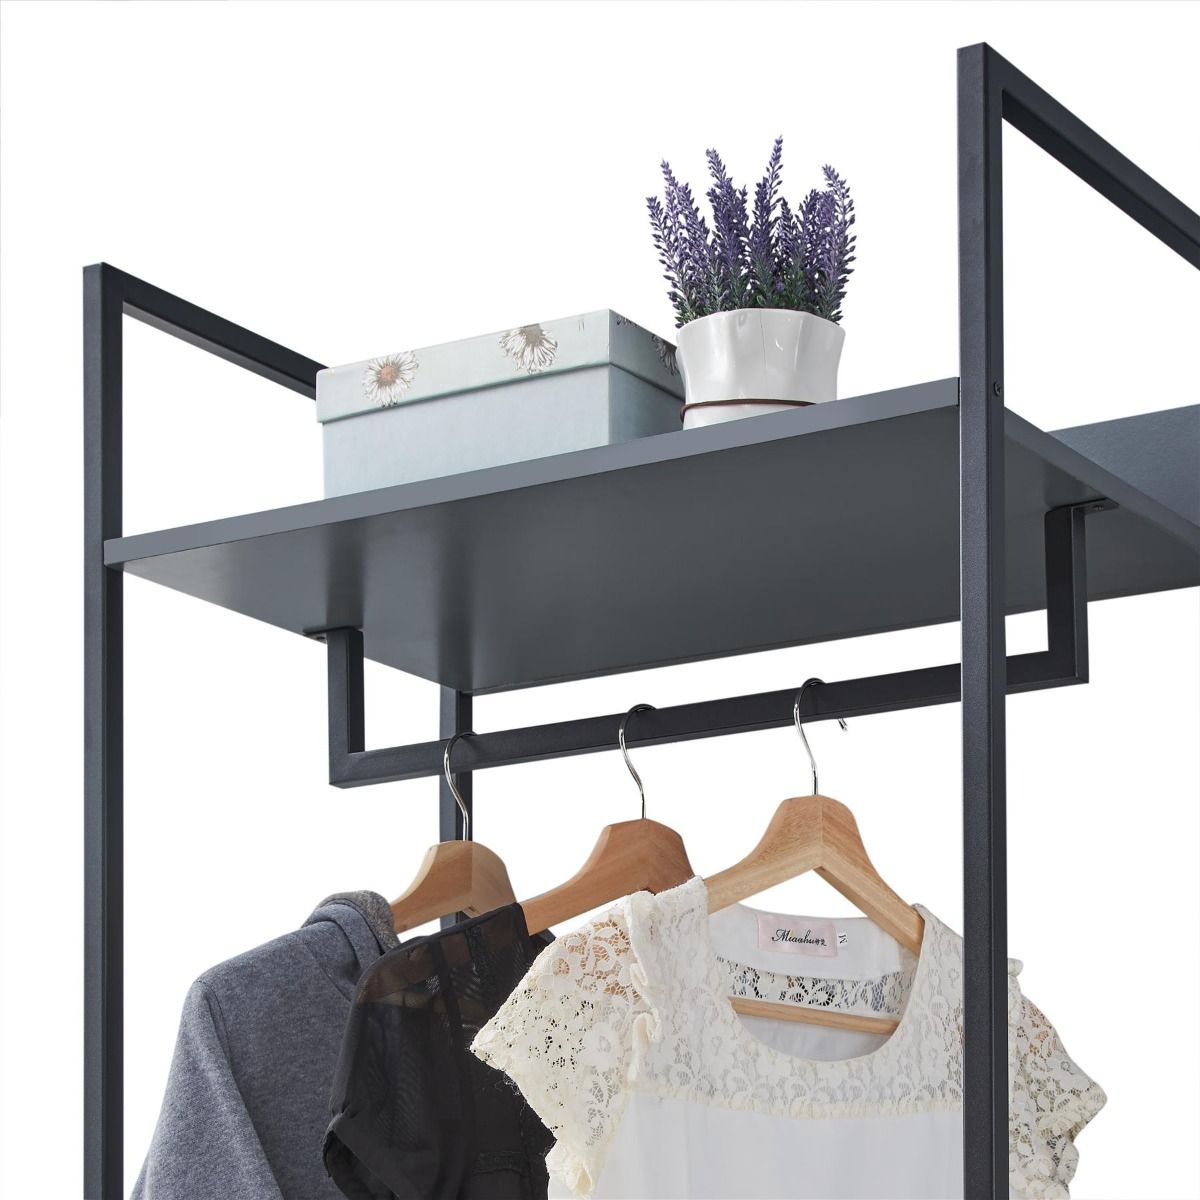 Seville Clothing Rack With Shelf Open Wardrobe Unit Industrial Design